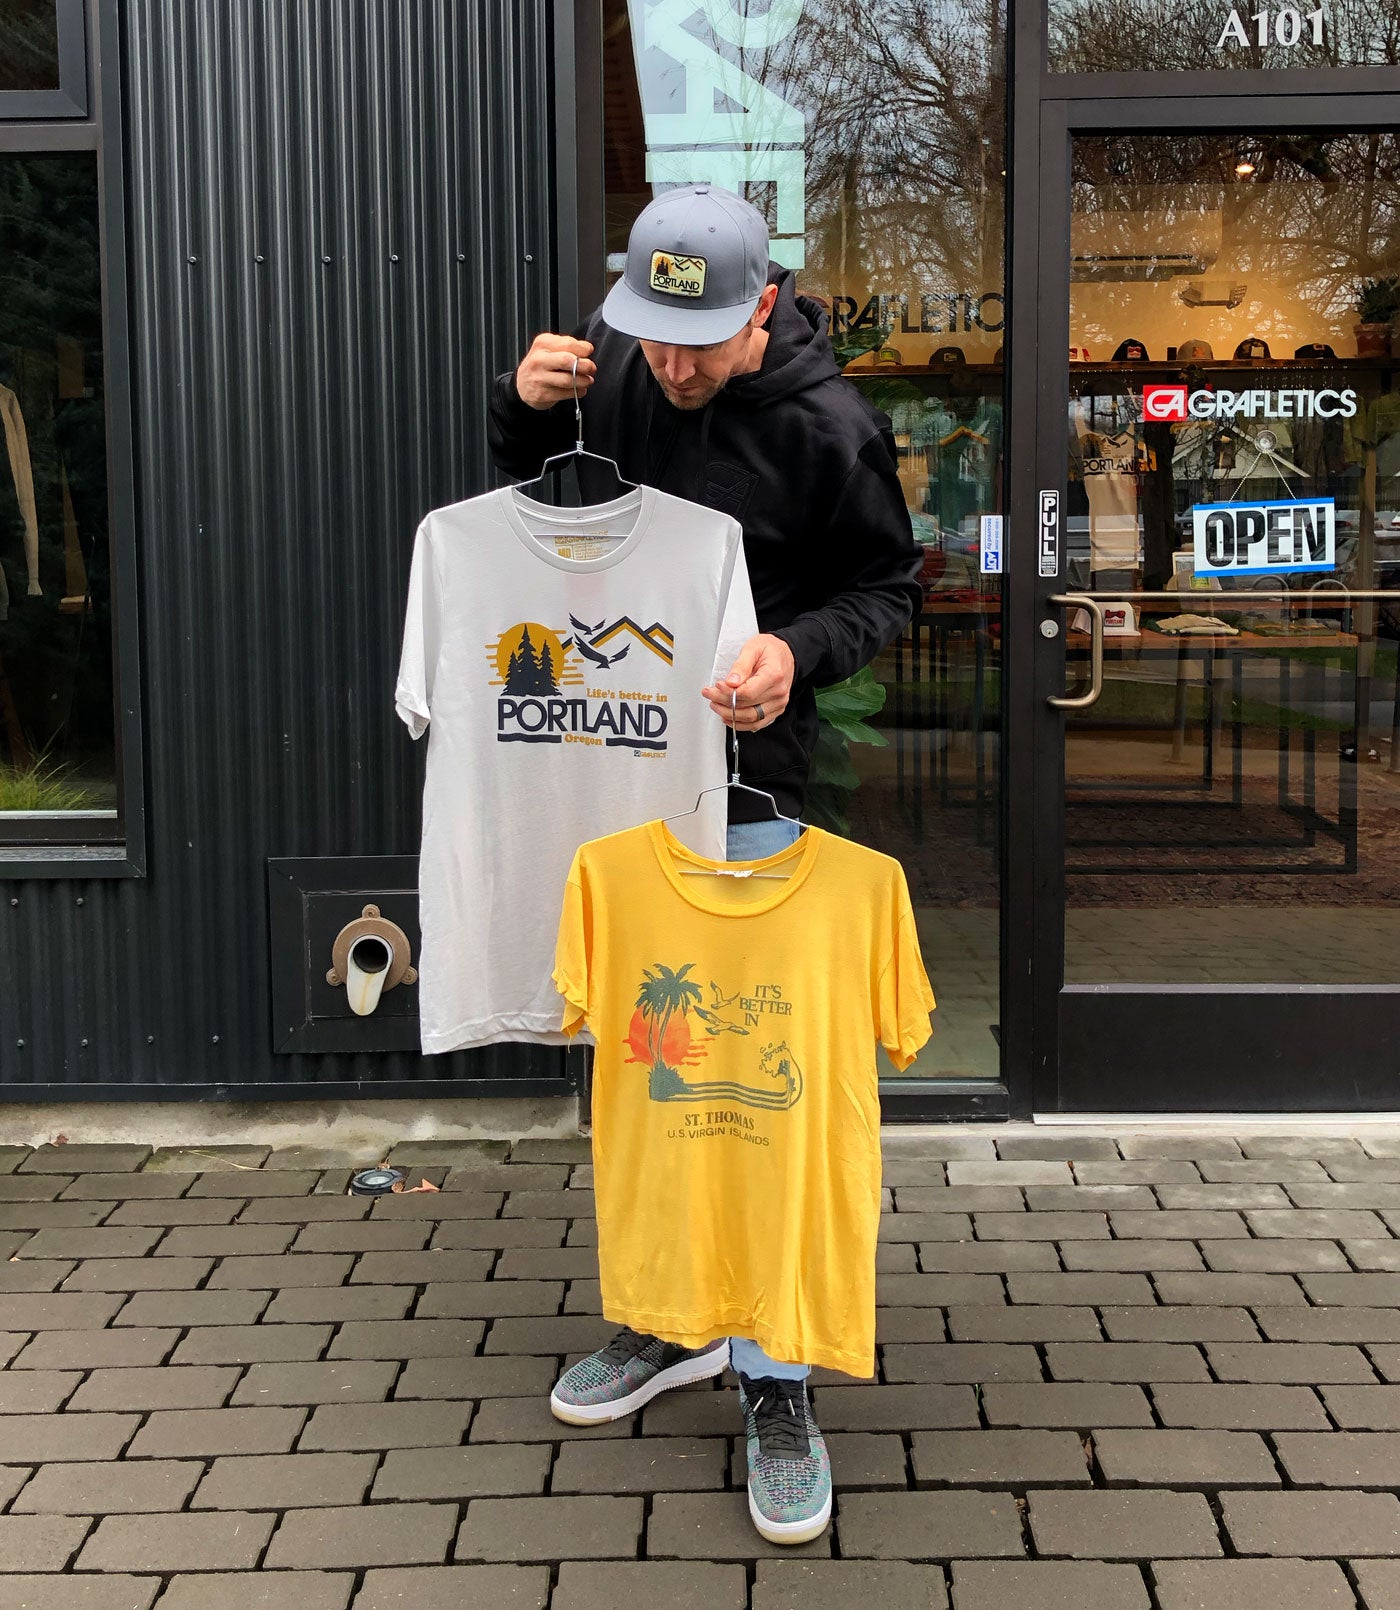 Life's Better in Portland T-Shirt by Grafletics